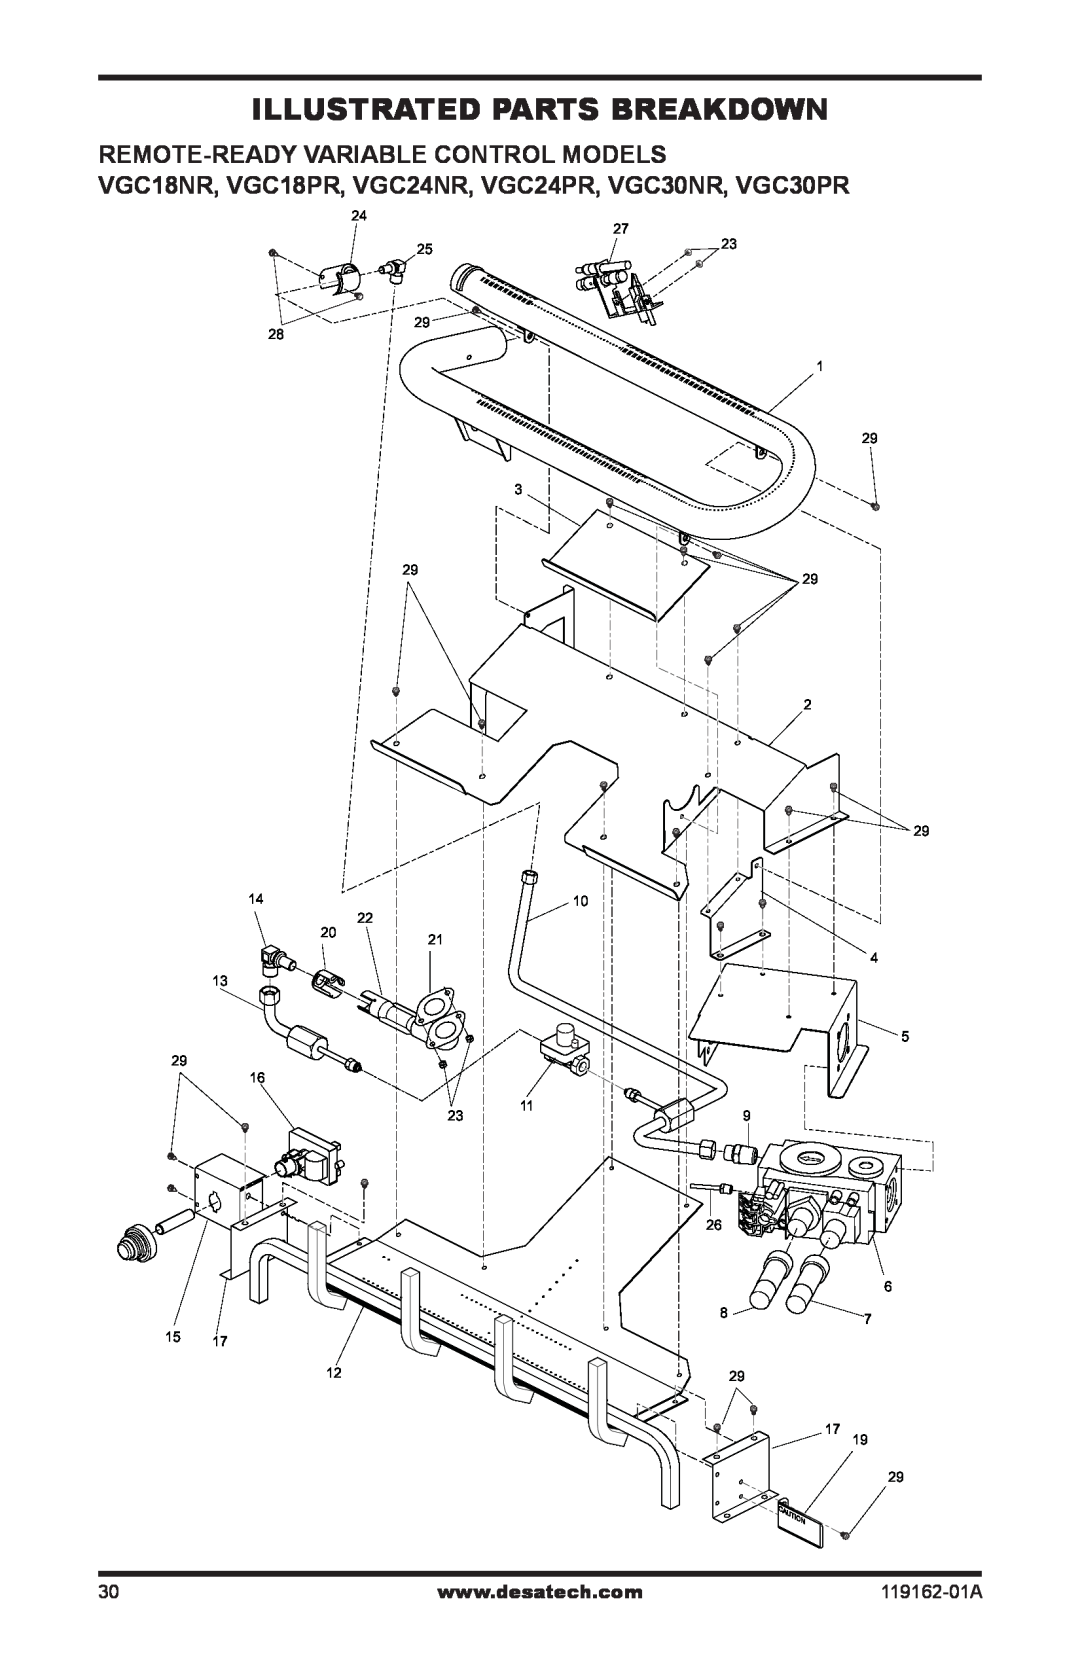 Desa VGC18NR/PR installation manual Illustrated Parts Breakdown, Remote-ReadyVariable Control Models 